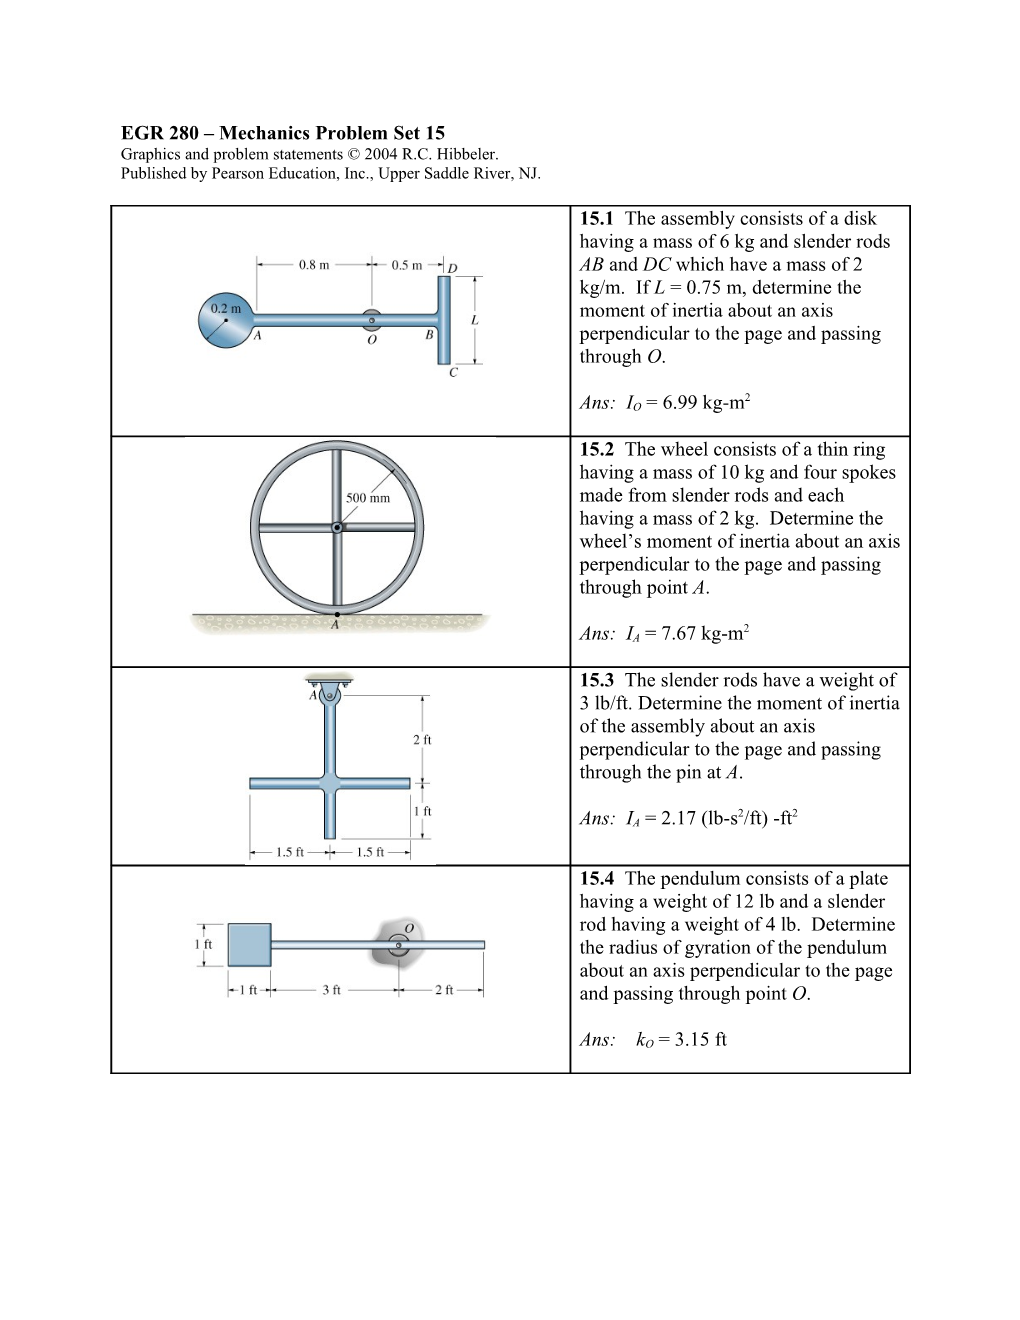 EGR 280 Mechanics Problem Set 1